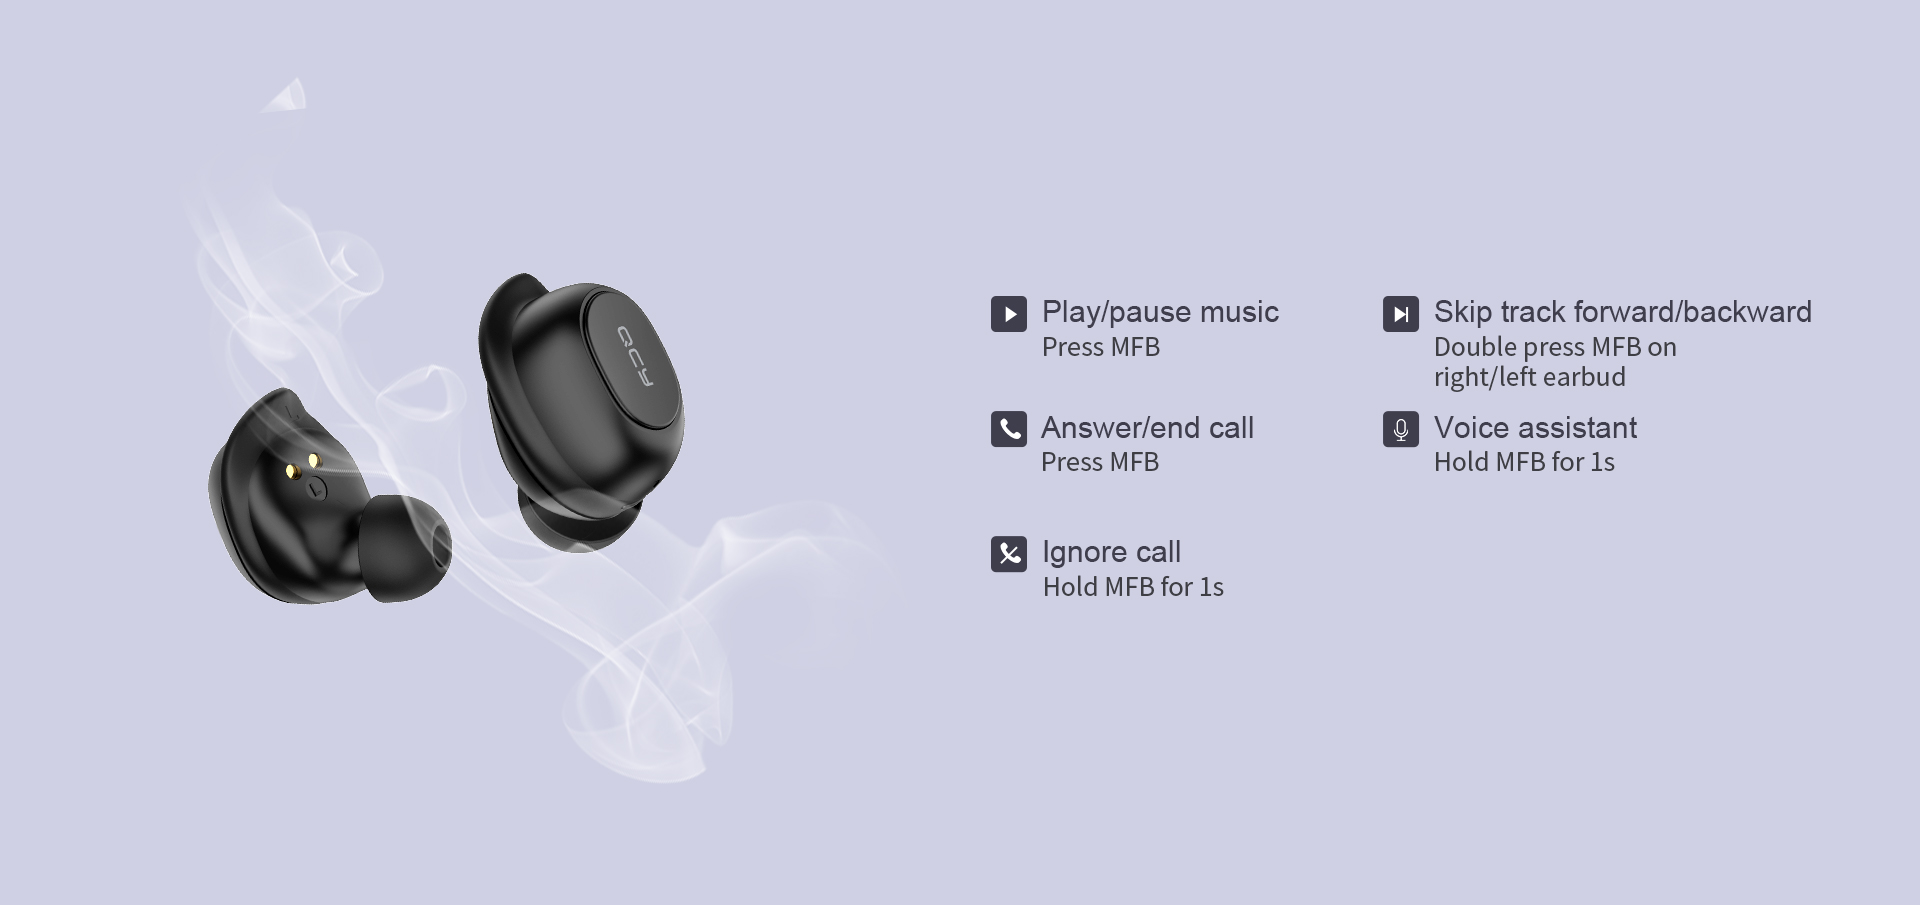 Original QCY T9S Wireless 5.0 Bluetooth Earphone Bass Sound Sweatproof In-ear Earbuds with Mic